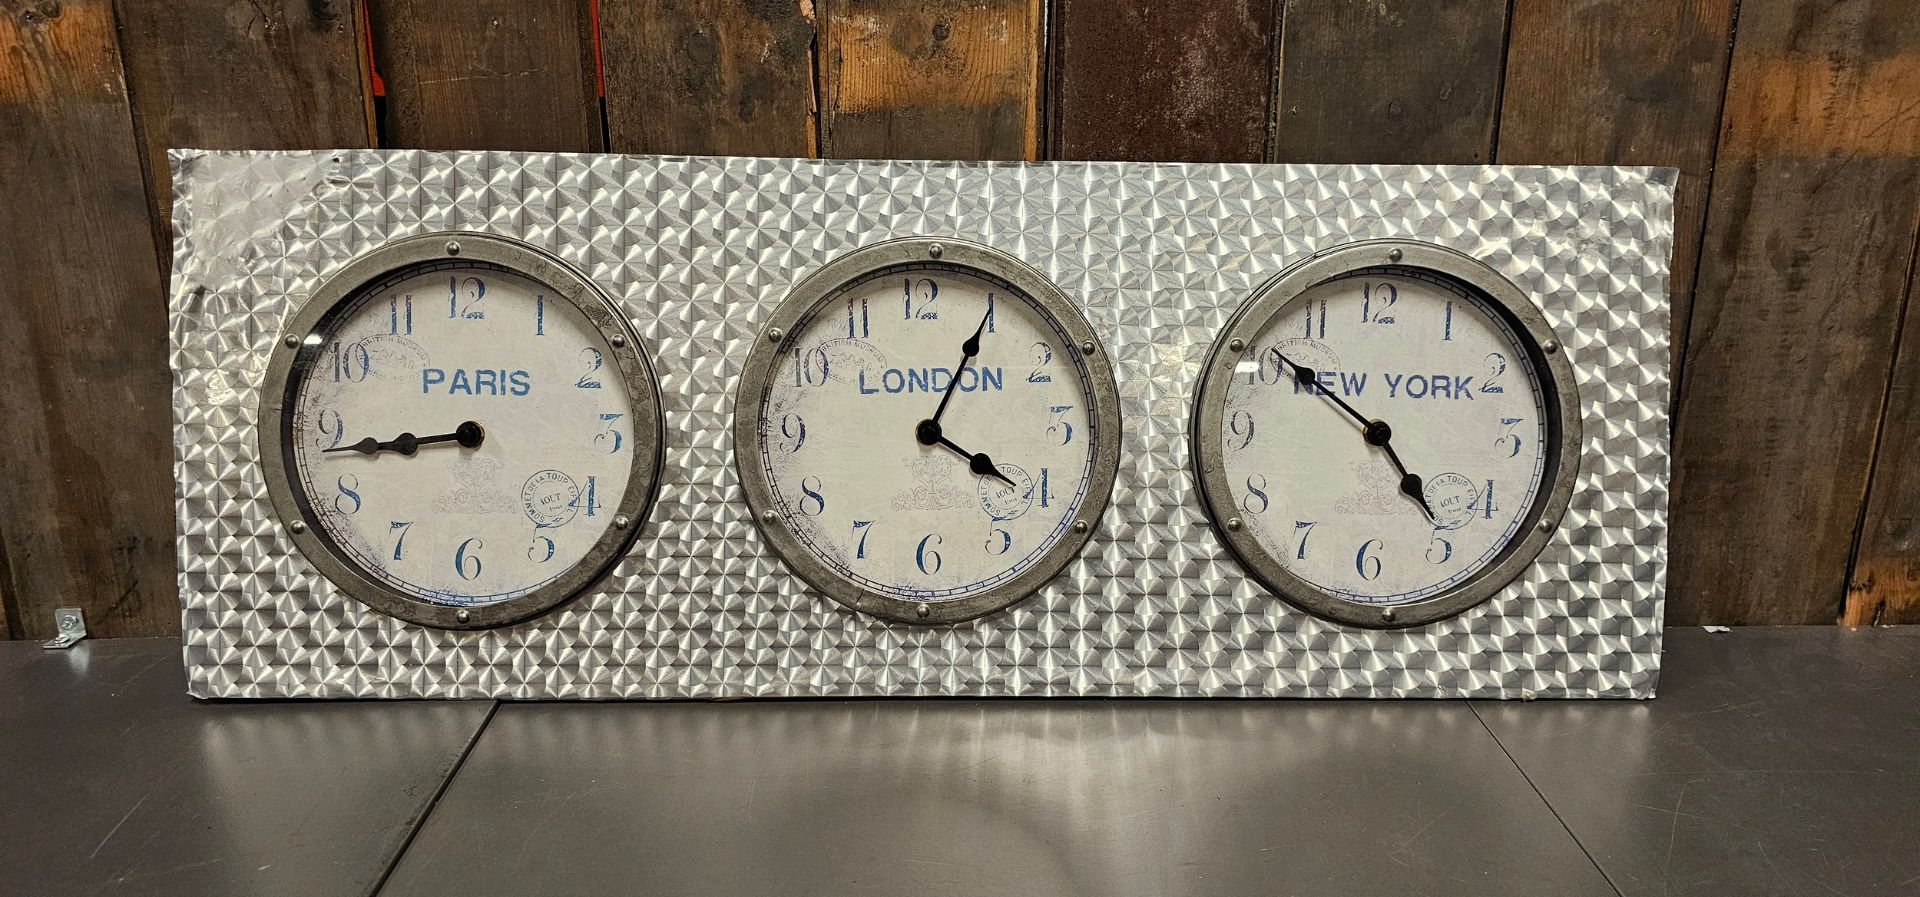 A time zone triple clock panel, London, New York, Paris, quartz movements, simulated turned alloy